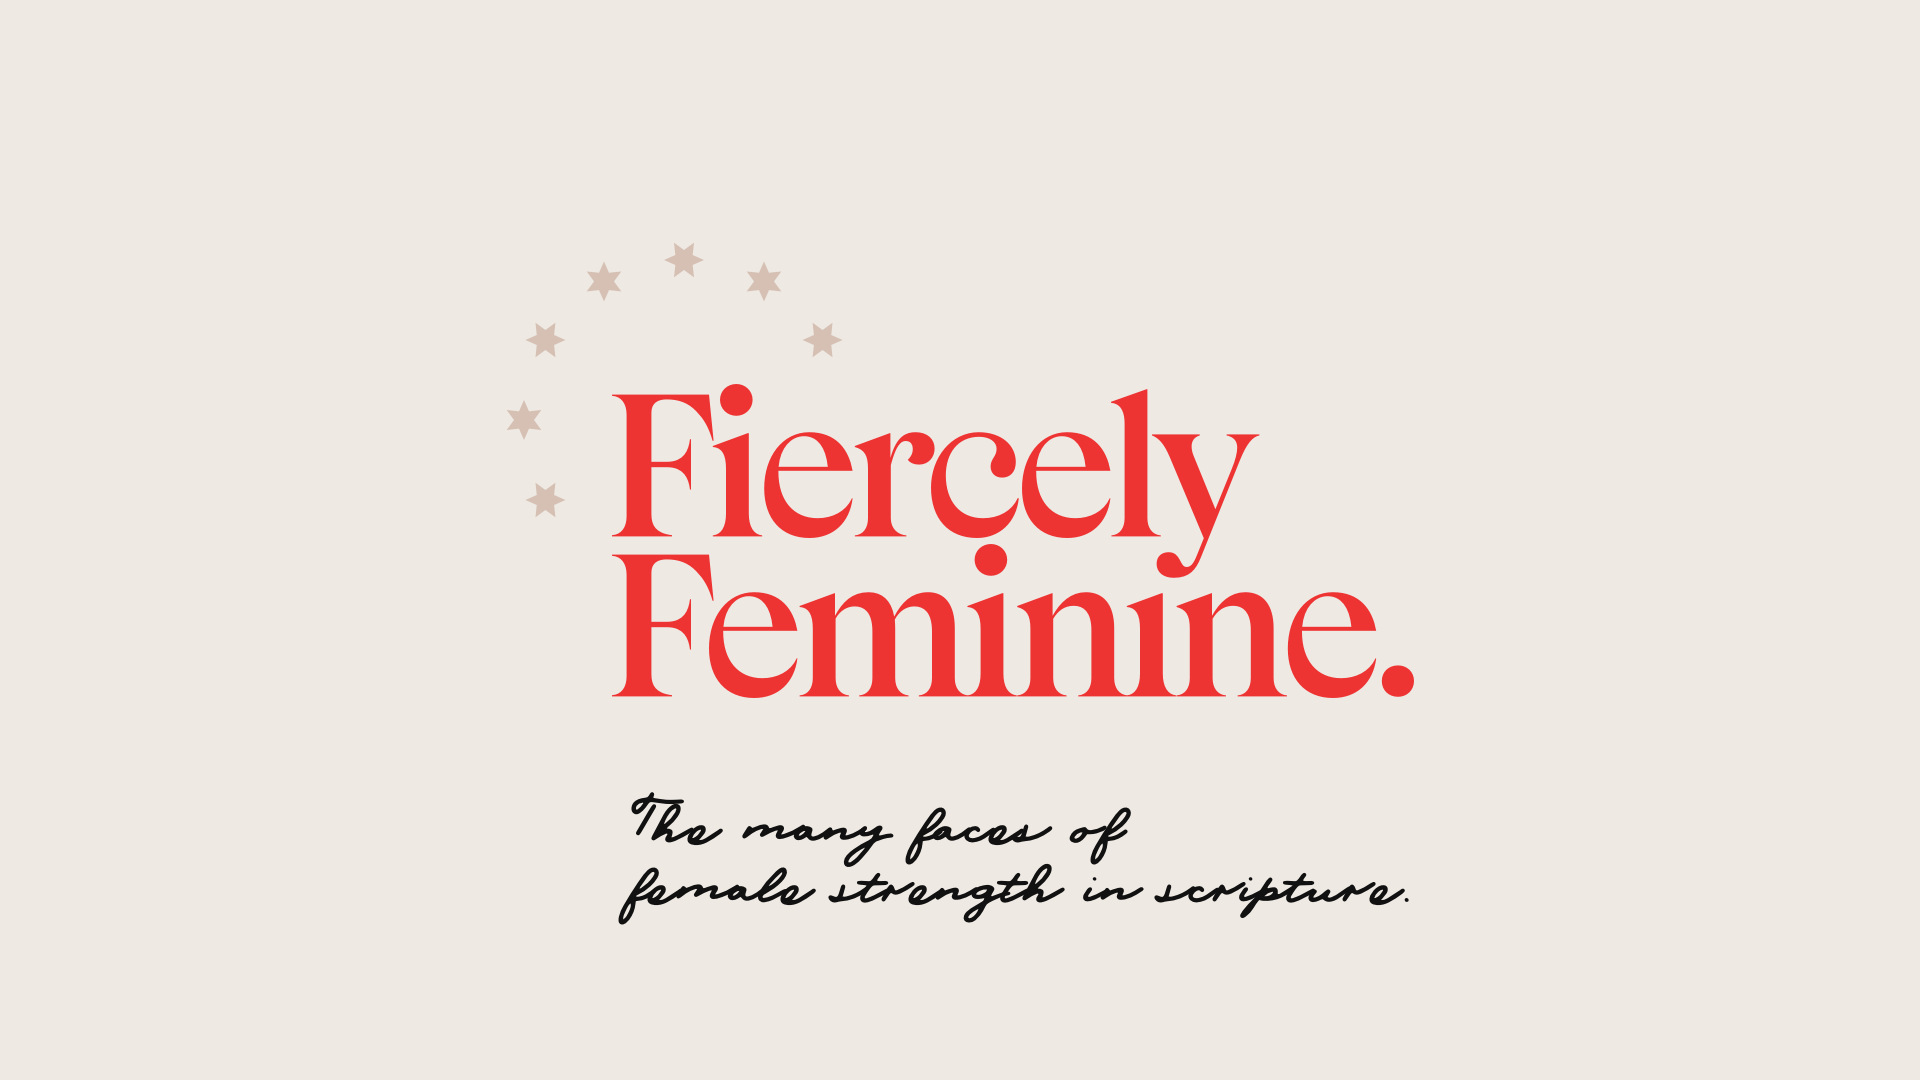 Fiercely Feminine.